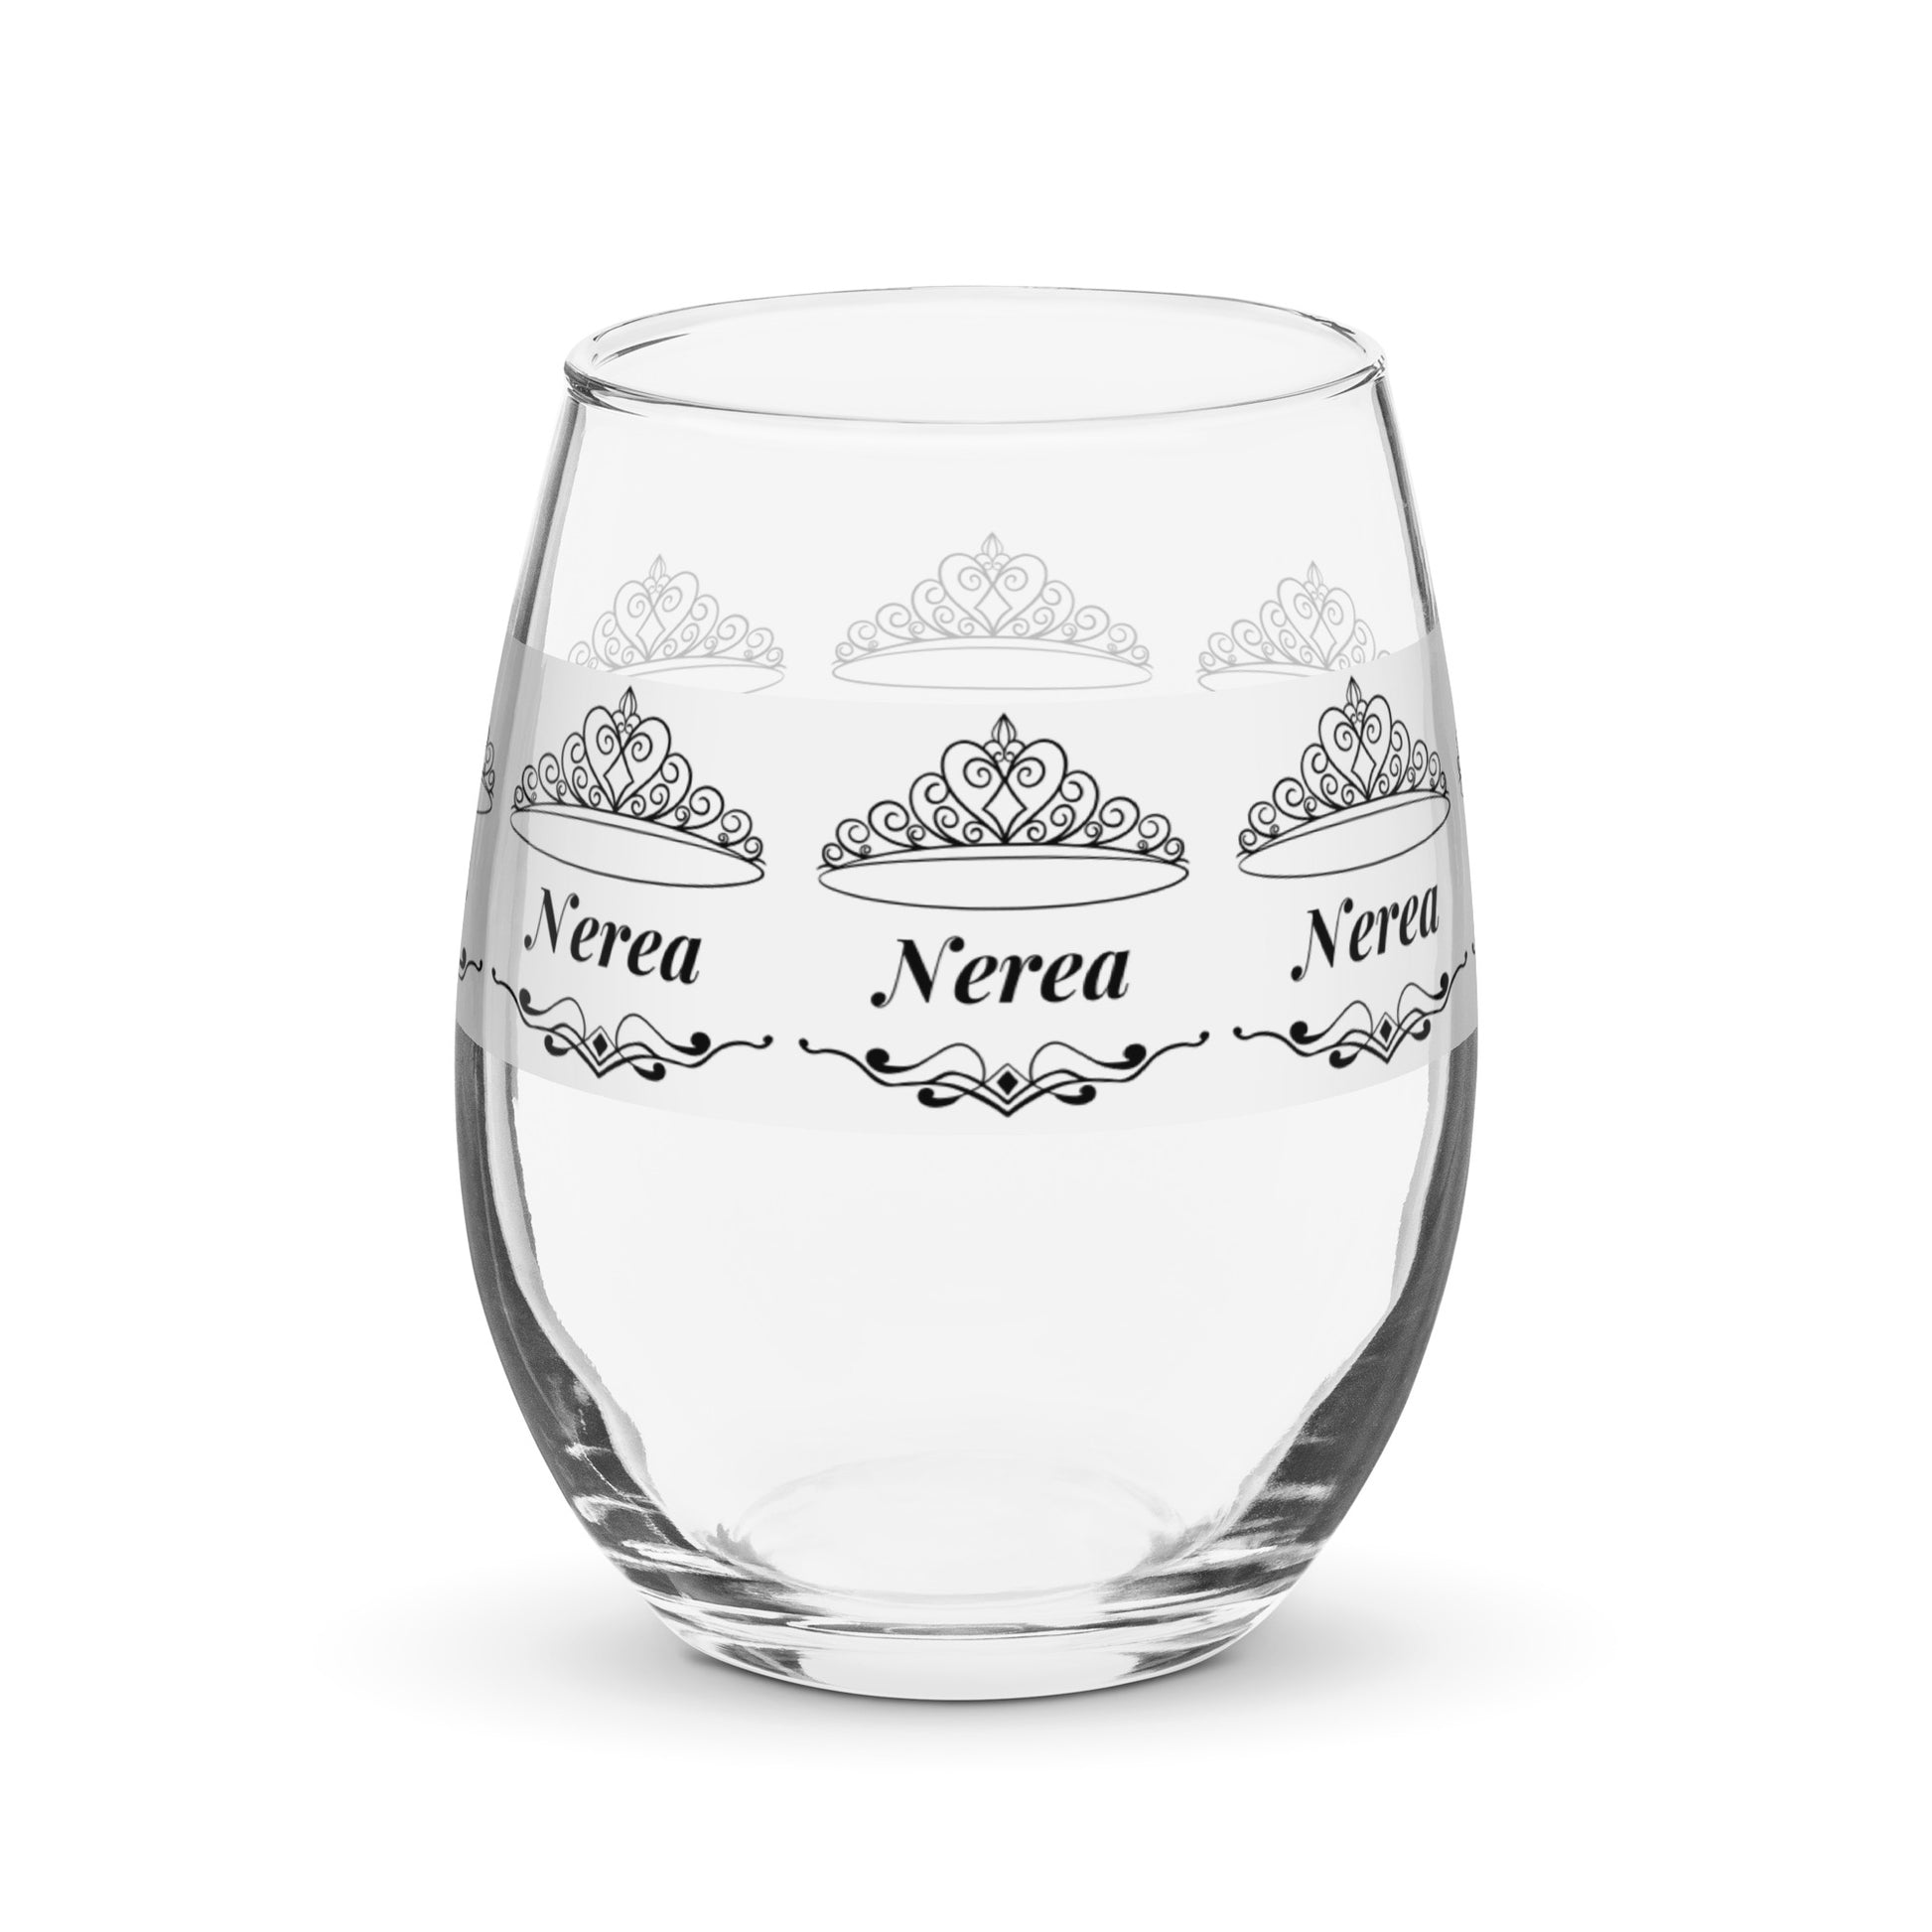 name wine glass Nerea personalized wine glass wine glass